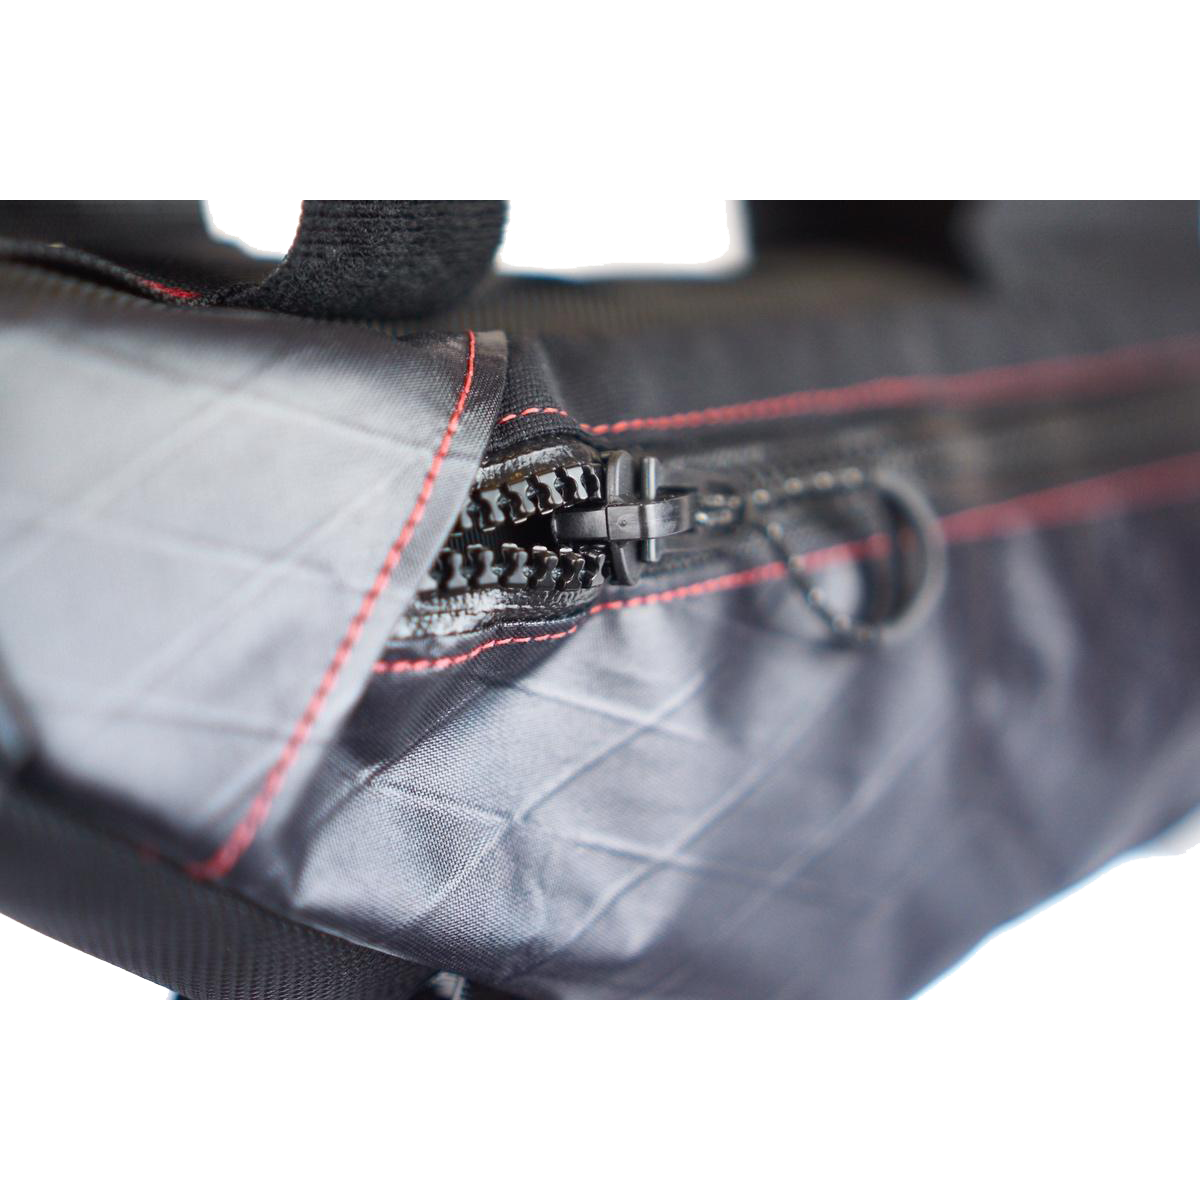 Revelate Design Tangle Bag Black - XS alternate view